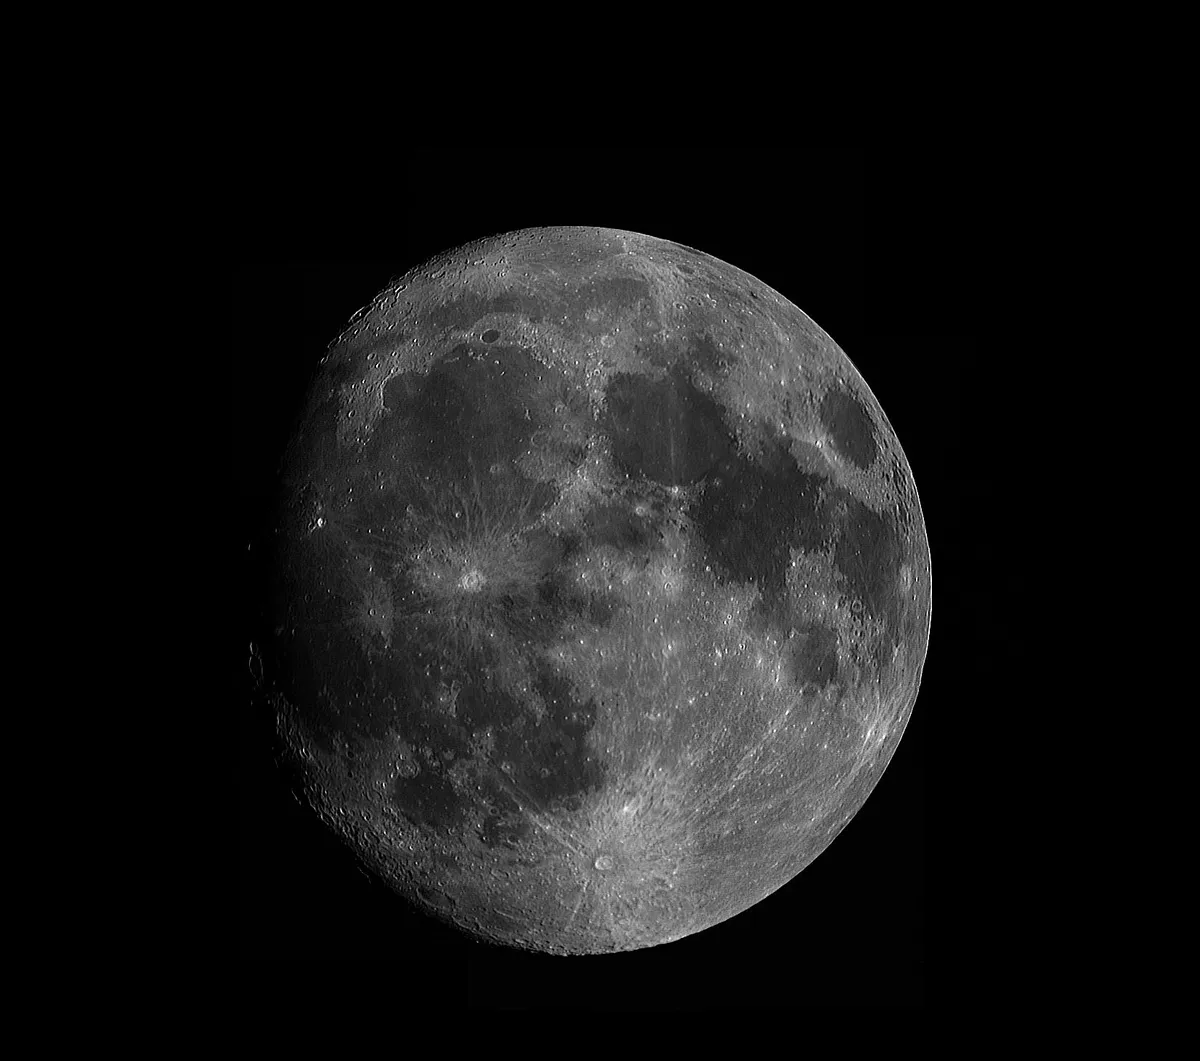 Mosaic Moon by Steve Macdonald, Bolton, Lancashire, UK. Equipment: Skywatcher 80ED Pro, Philips Toucam Pro II webcam.